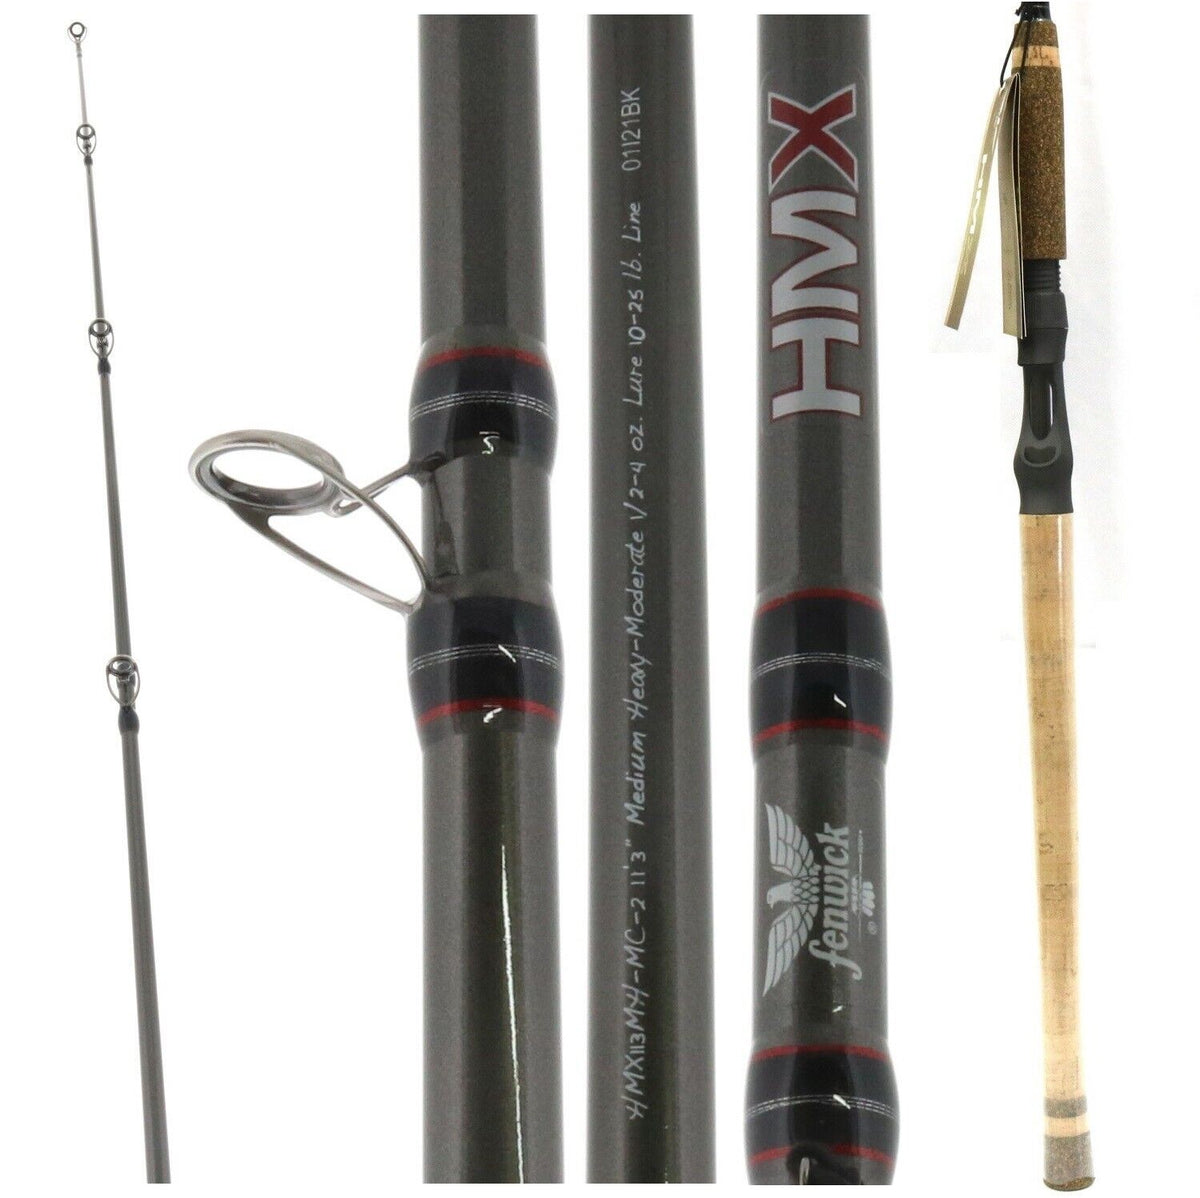 Fenwick HMX Spinning Fishing Rod, 6'6 - Medium - 2pcs 